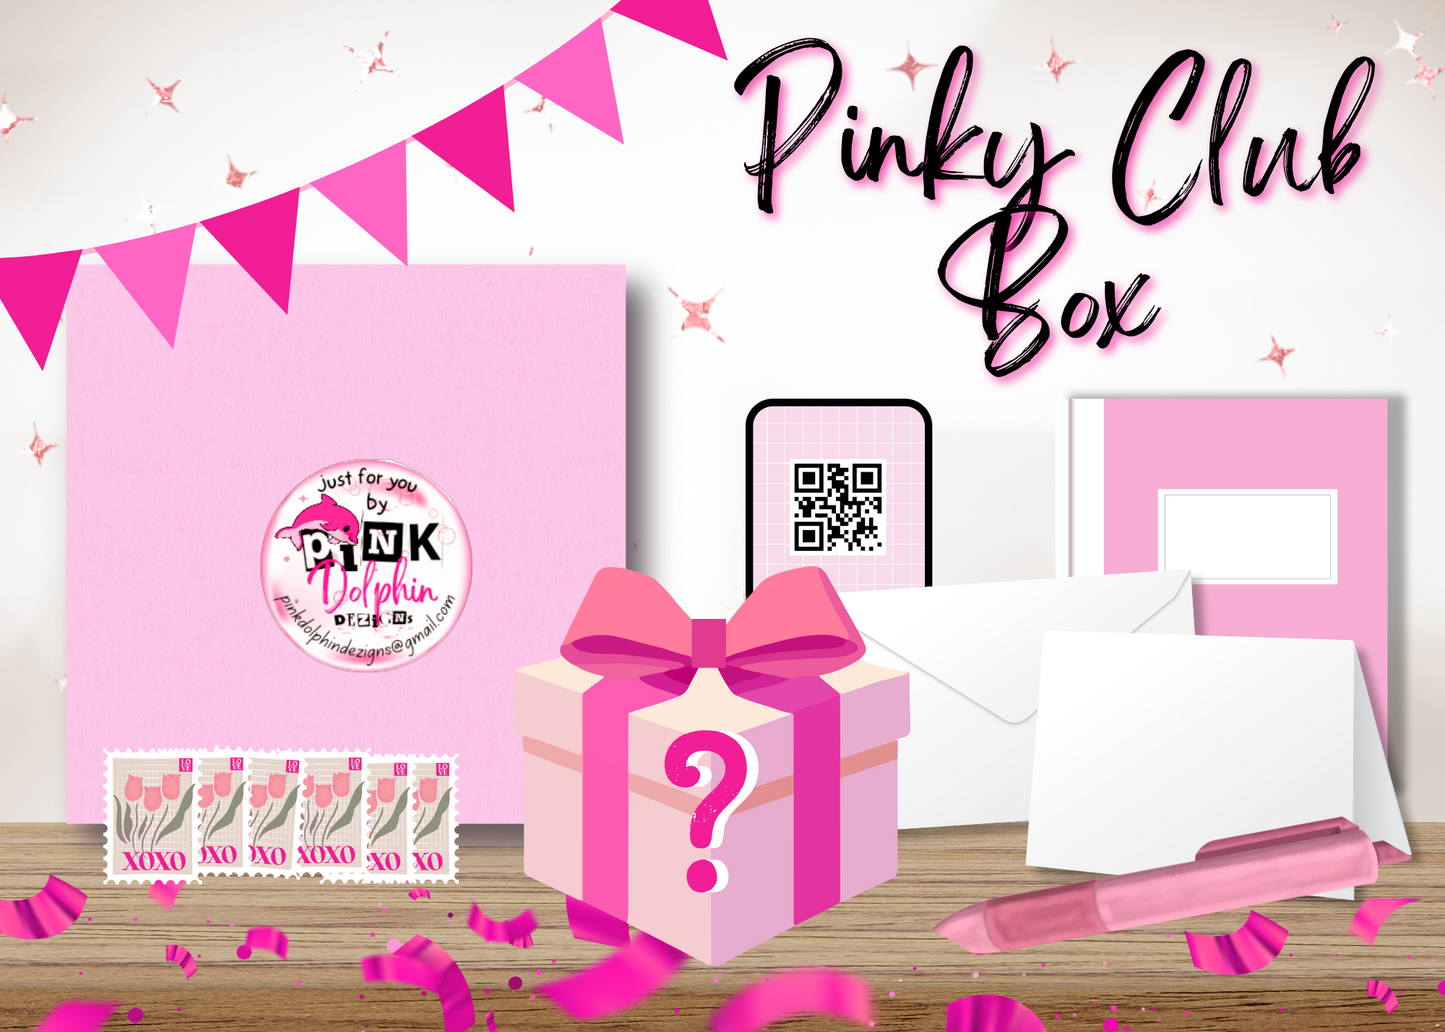 The Pinky Club Box